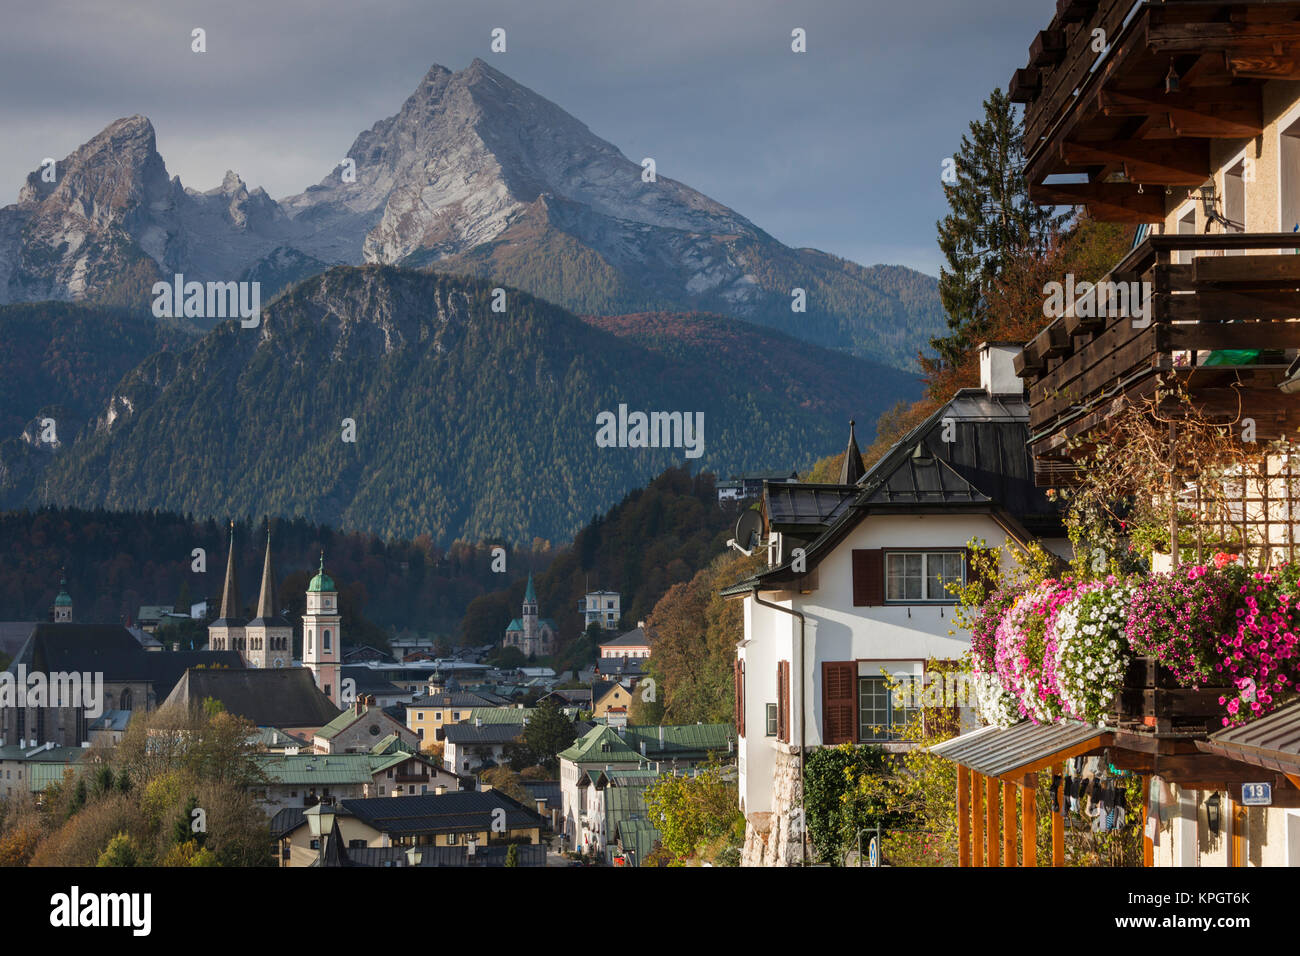 Germany, Bavaria, Berchtesgaden, elevated town view with Watzmann Mountain (el. 2713 meters) Stock Photo